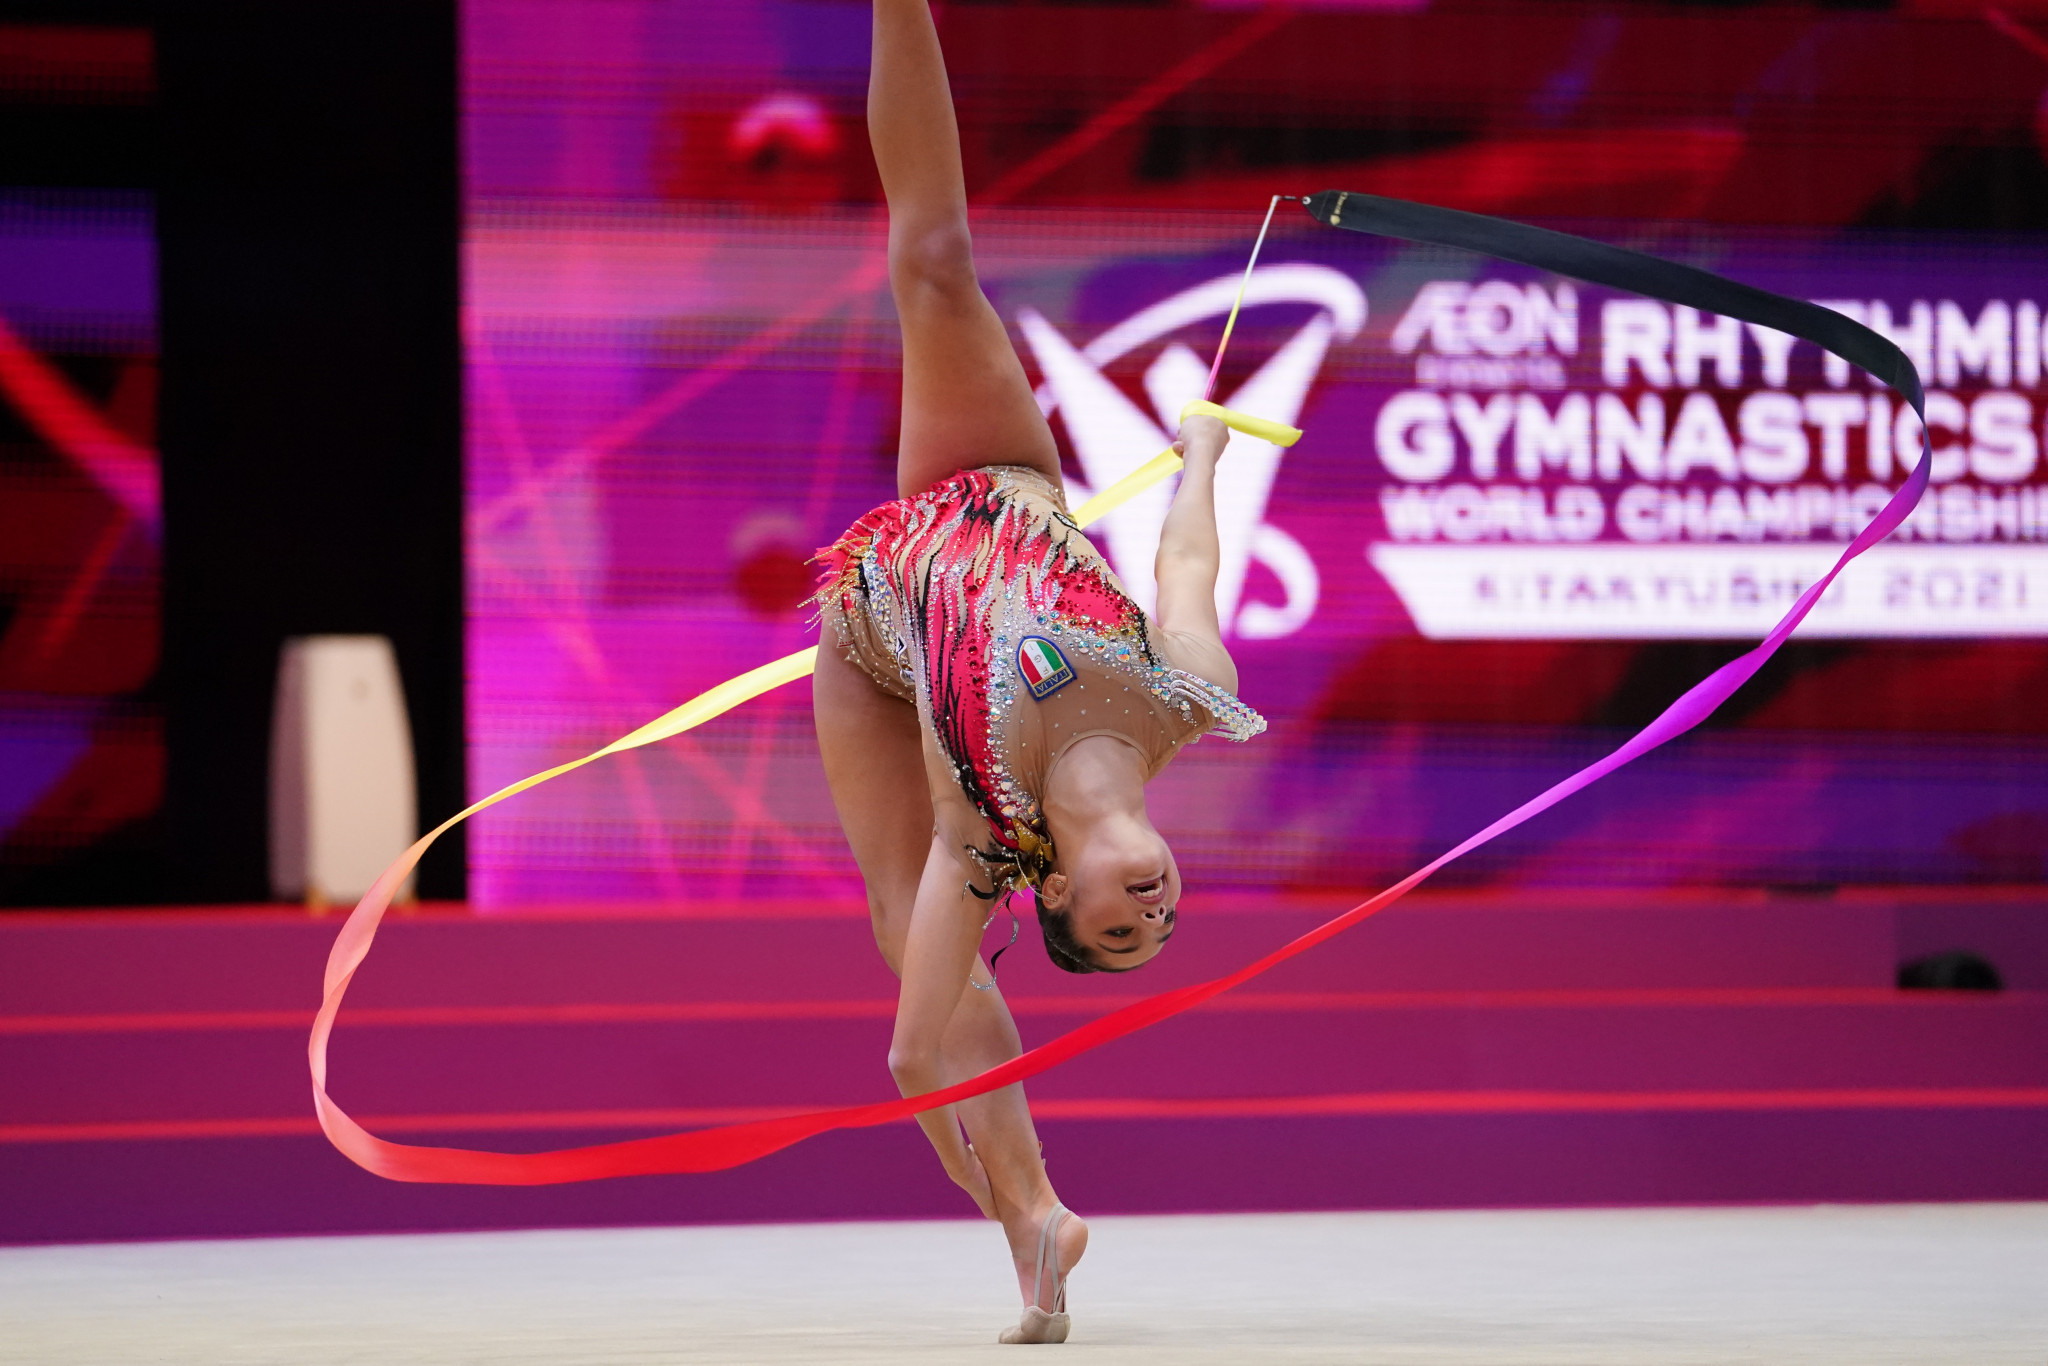 Tashkent to host third leg of Rhythmic Gymnastics World Cup series